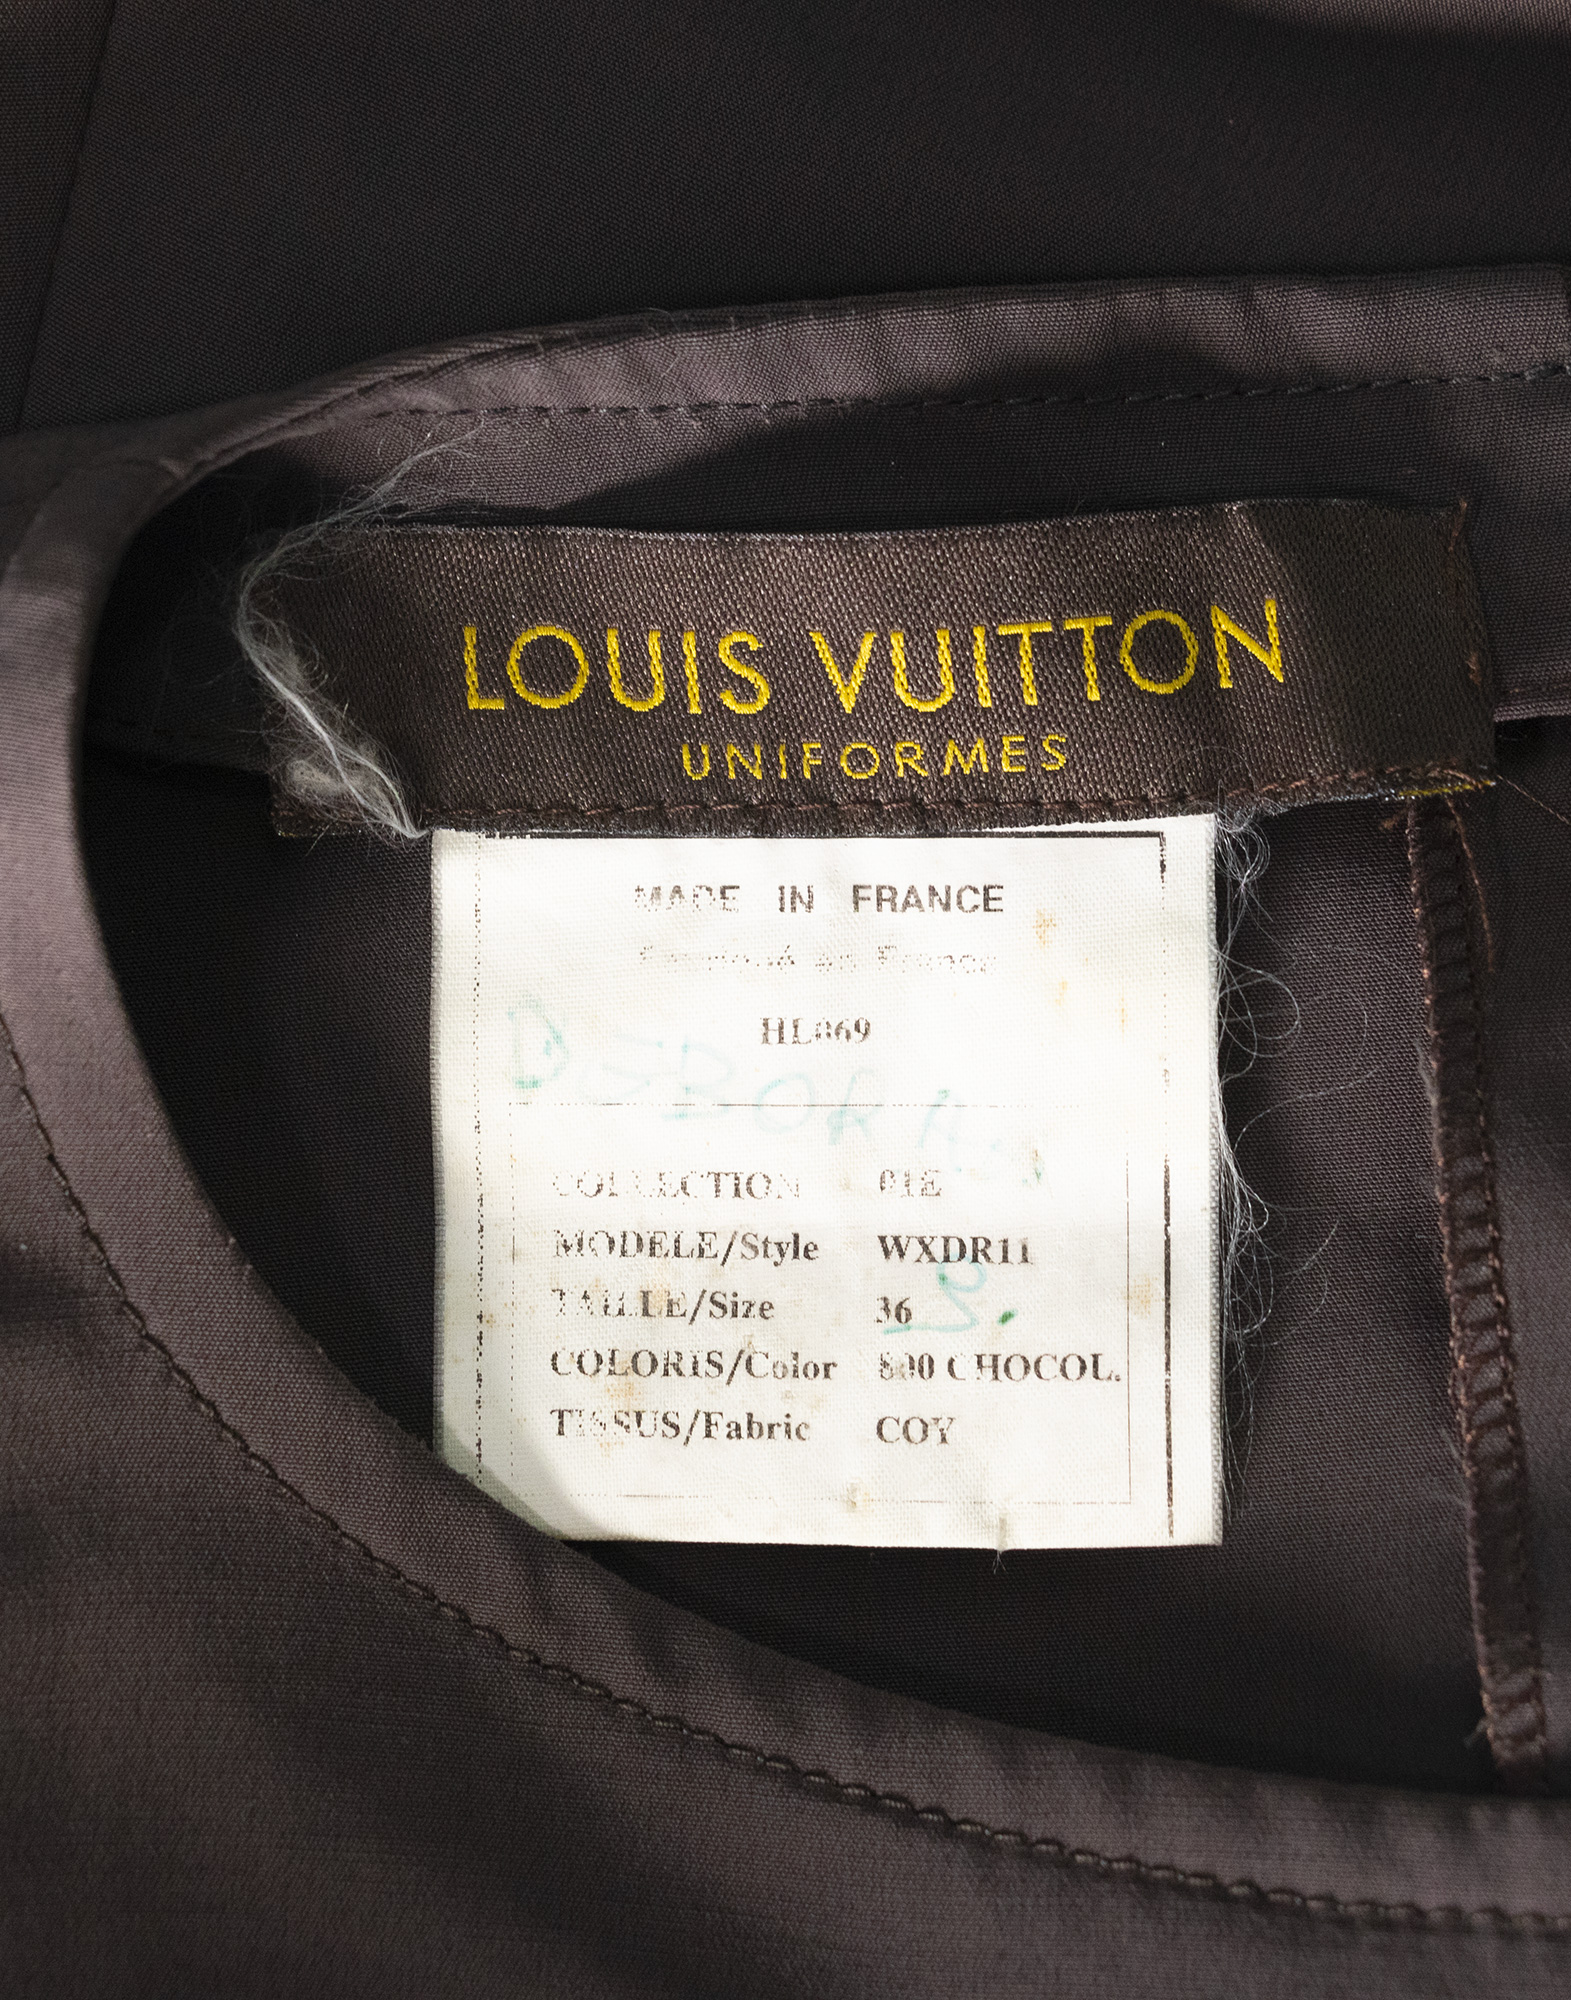 Louis Vuitton Uniformes - Brown sheath dress